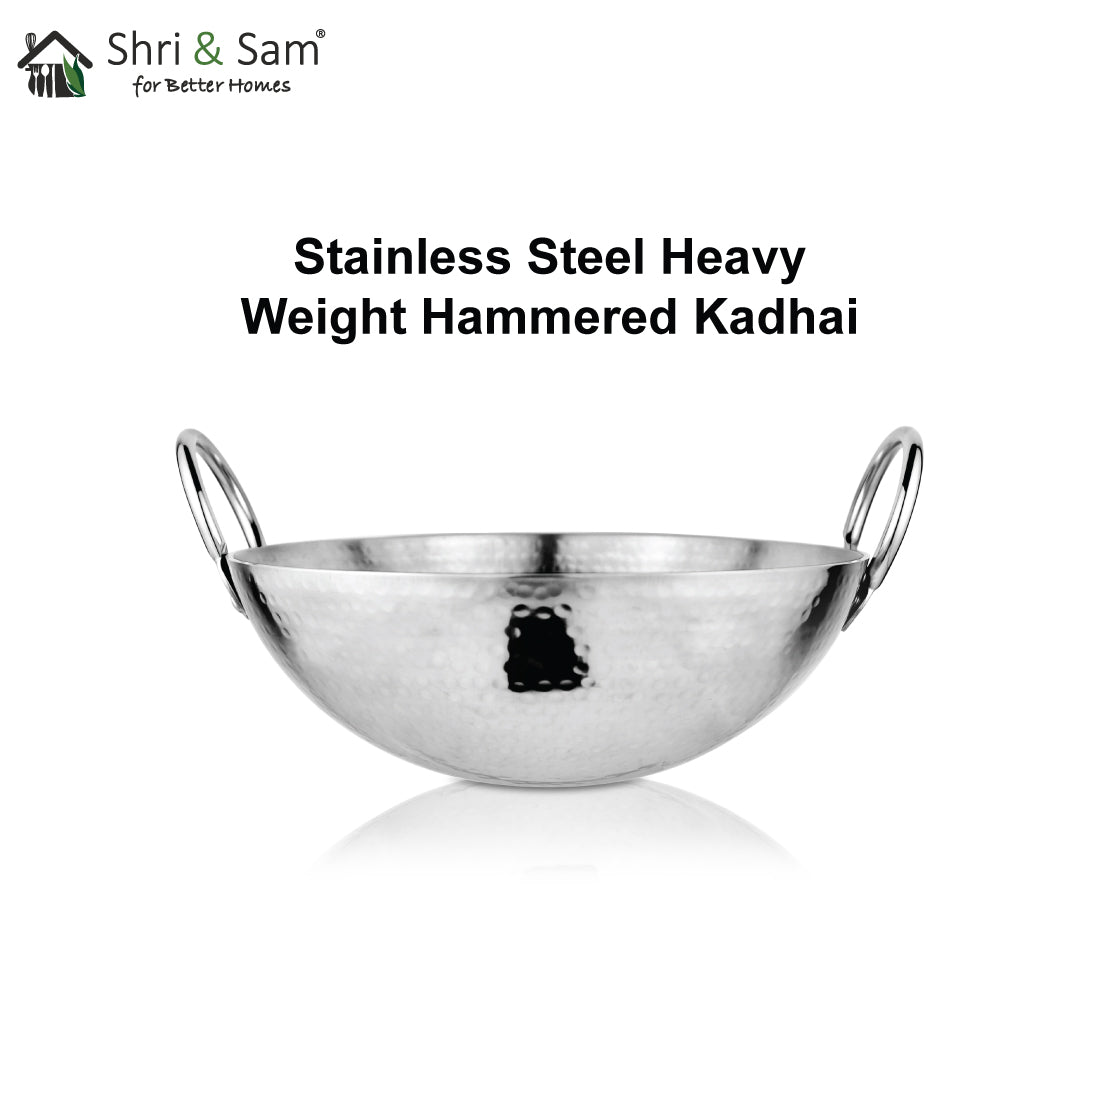 Stainless Steel Heavy Weight Hammered Kadhai